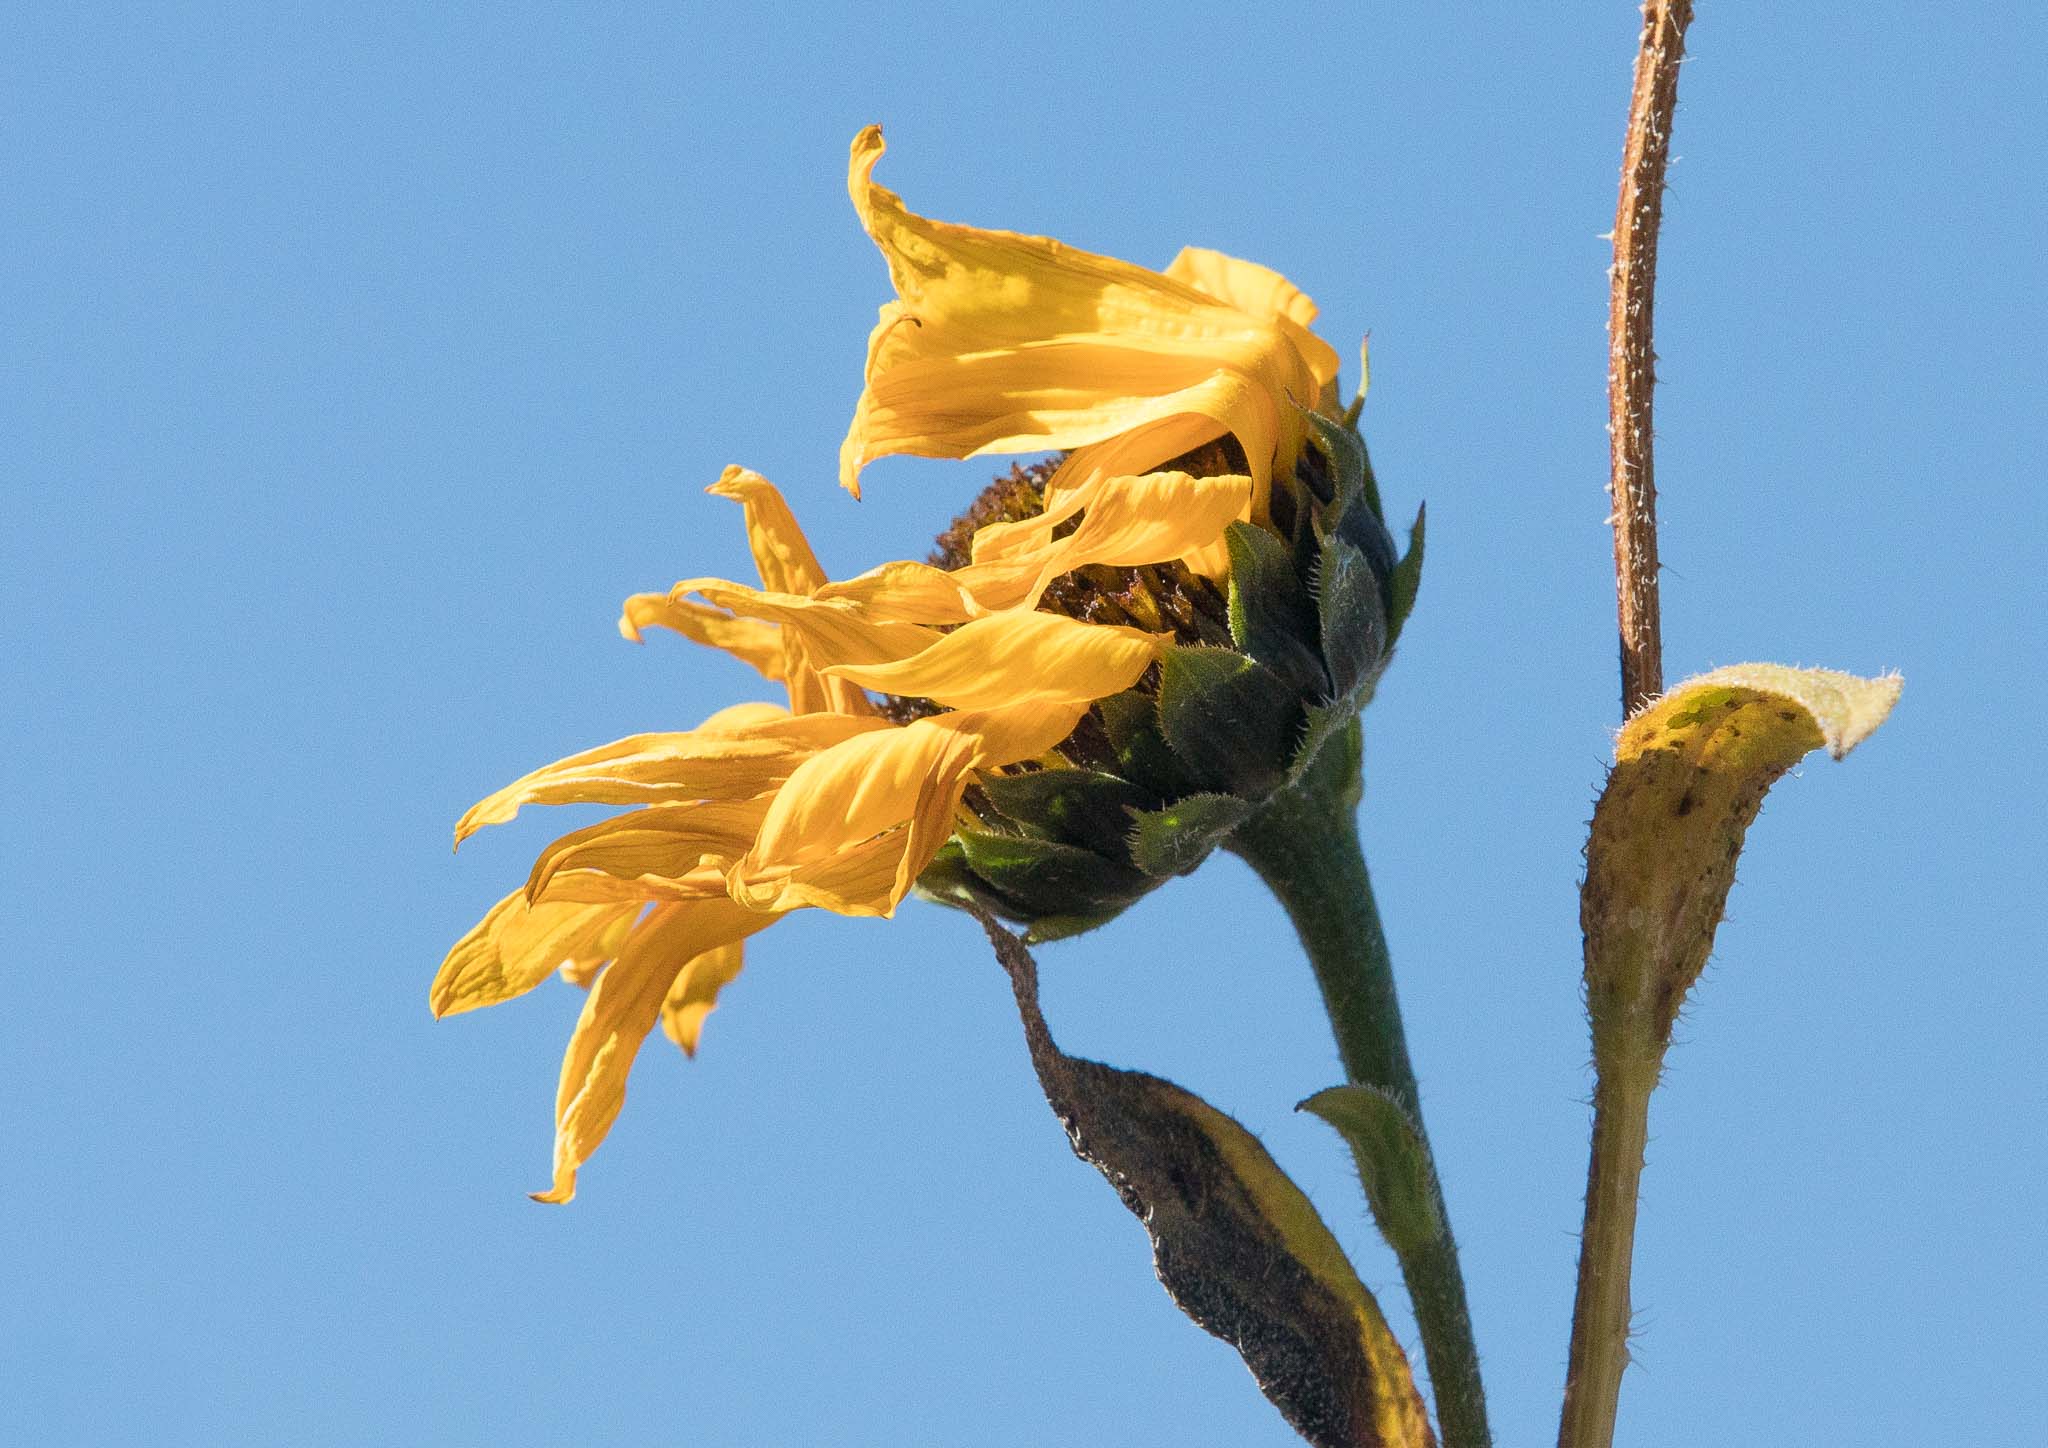 Fading common sunflower, Bosque del Apache National Wildlife Refuge, San Antonio NM, October 22, 2017